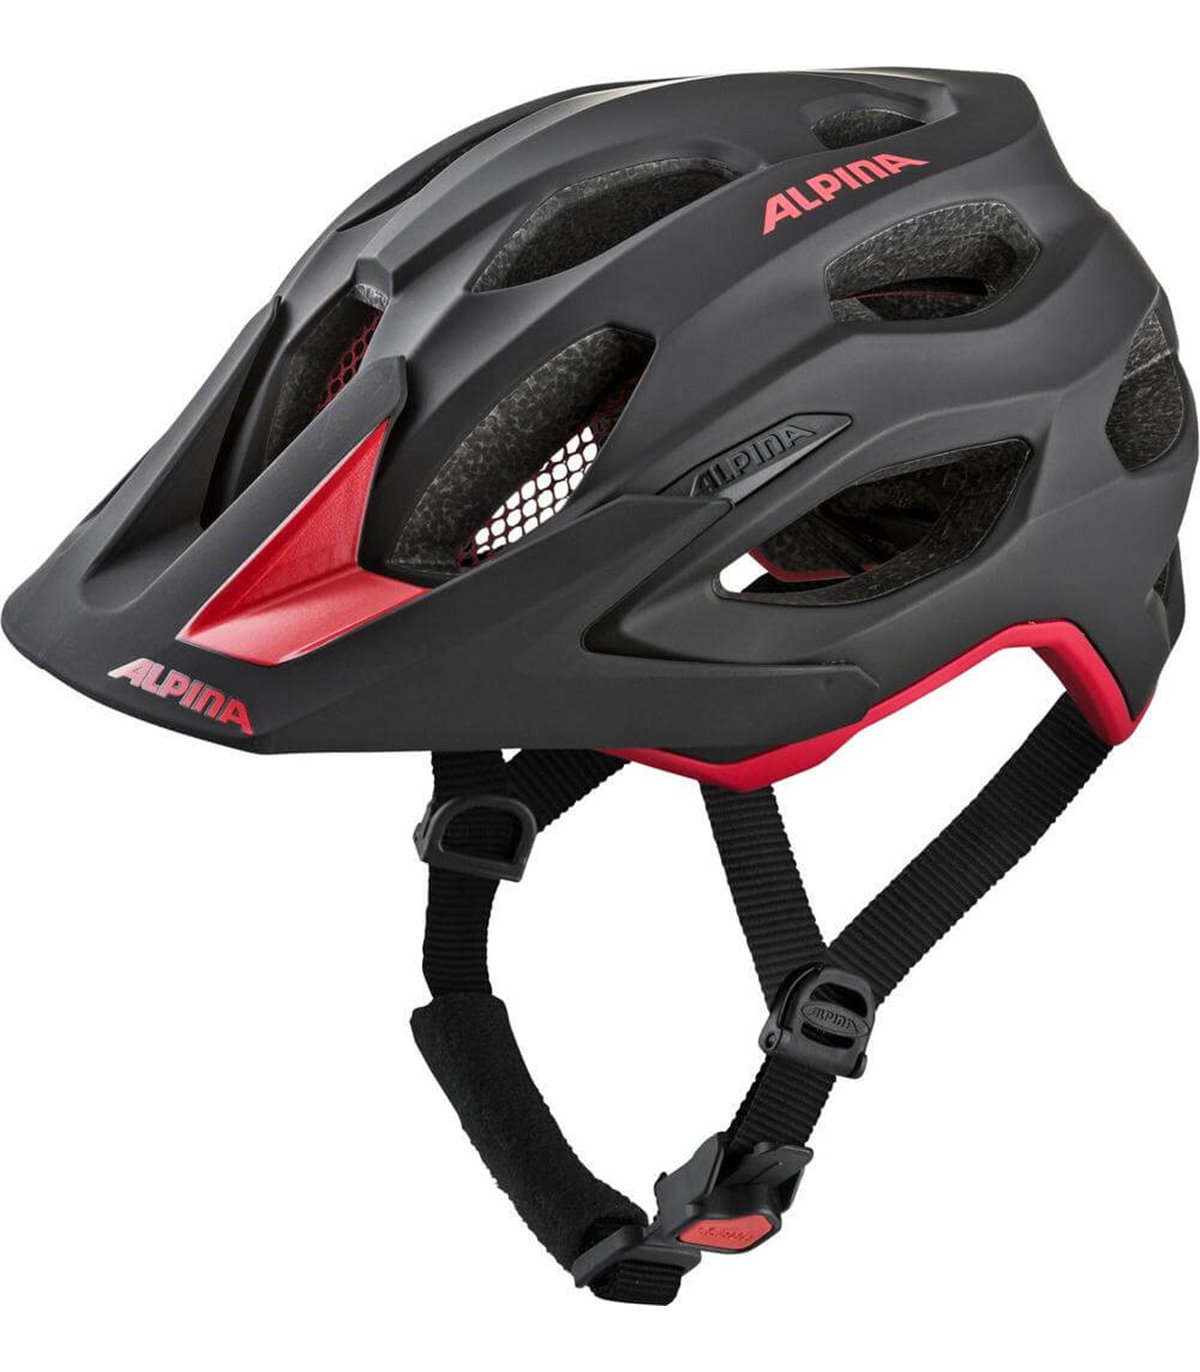 black and red bike helmet